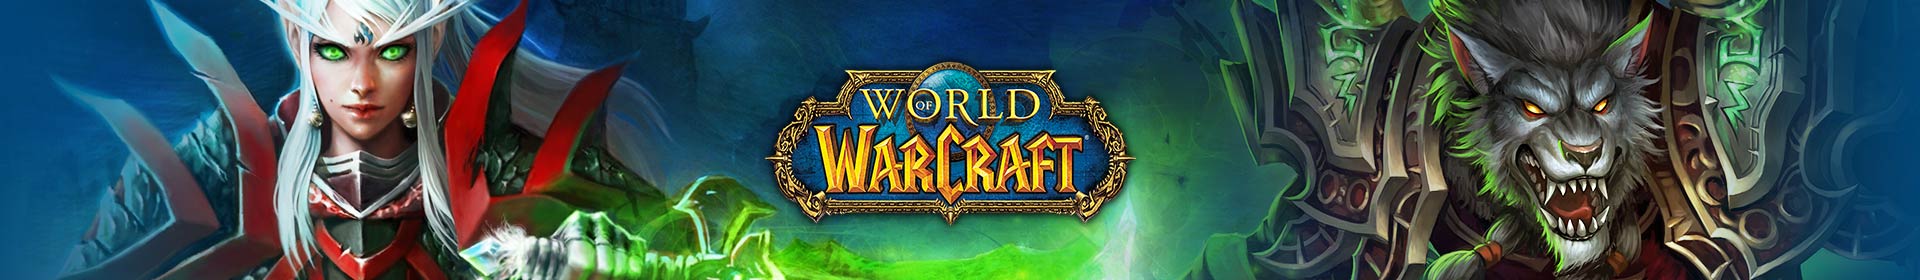 World of Warcraft Gold US